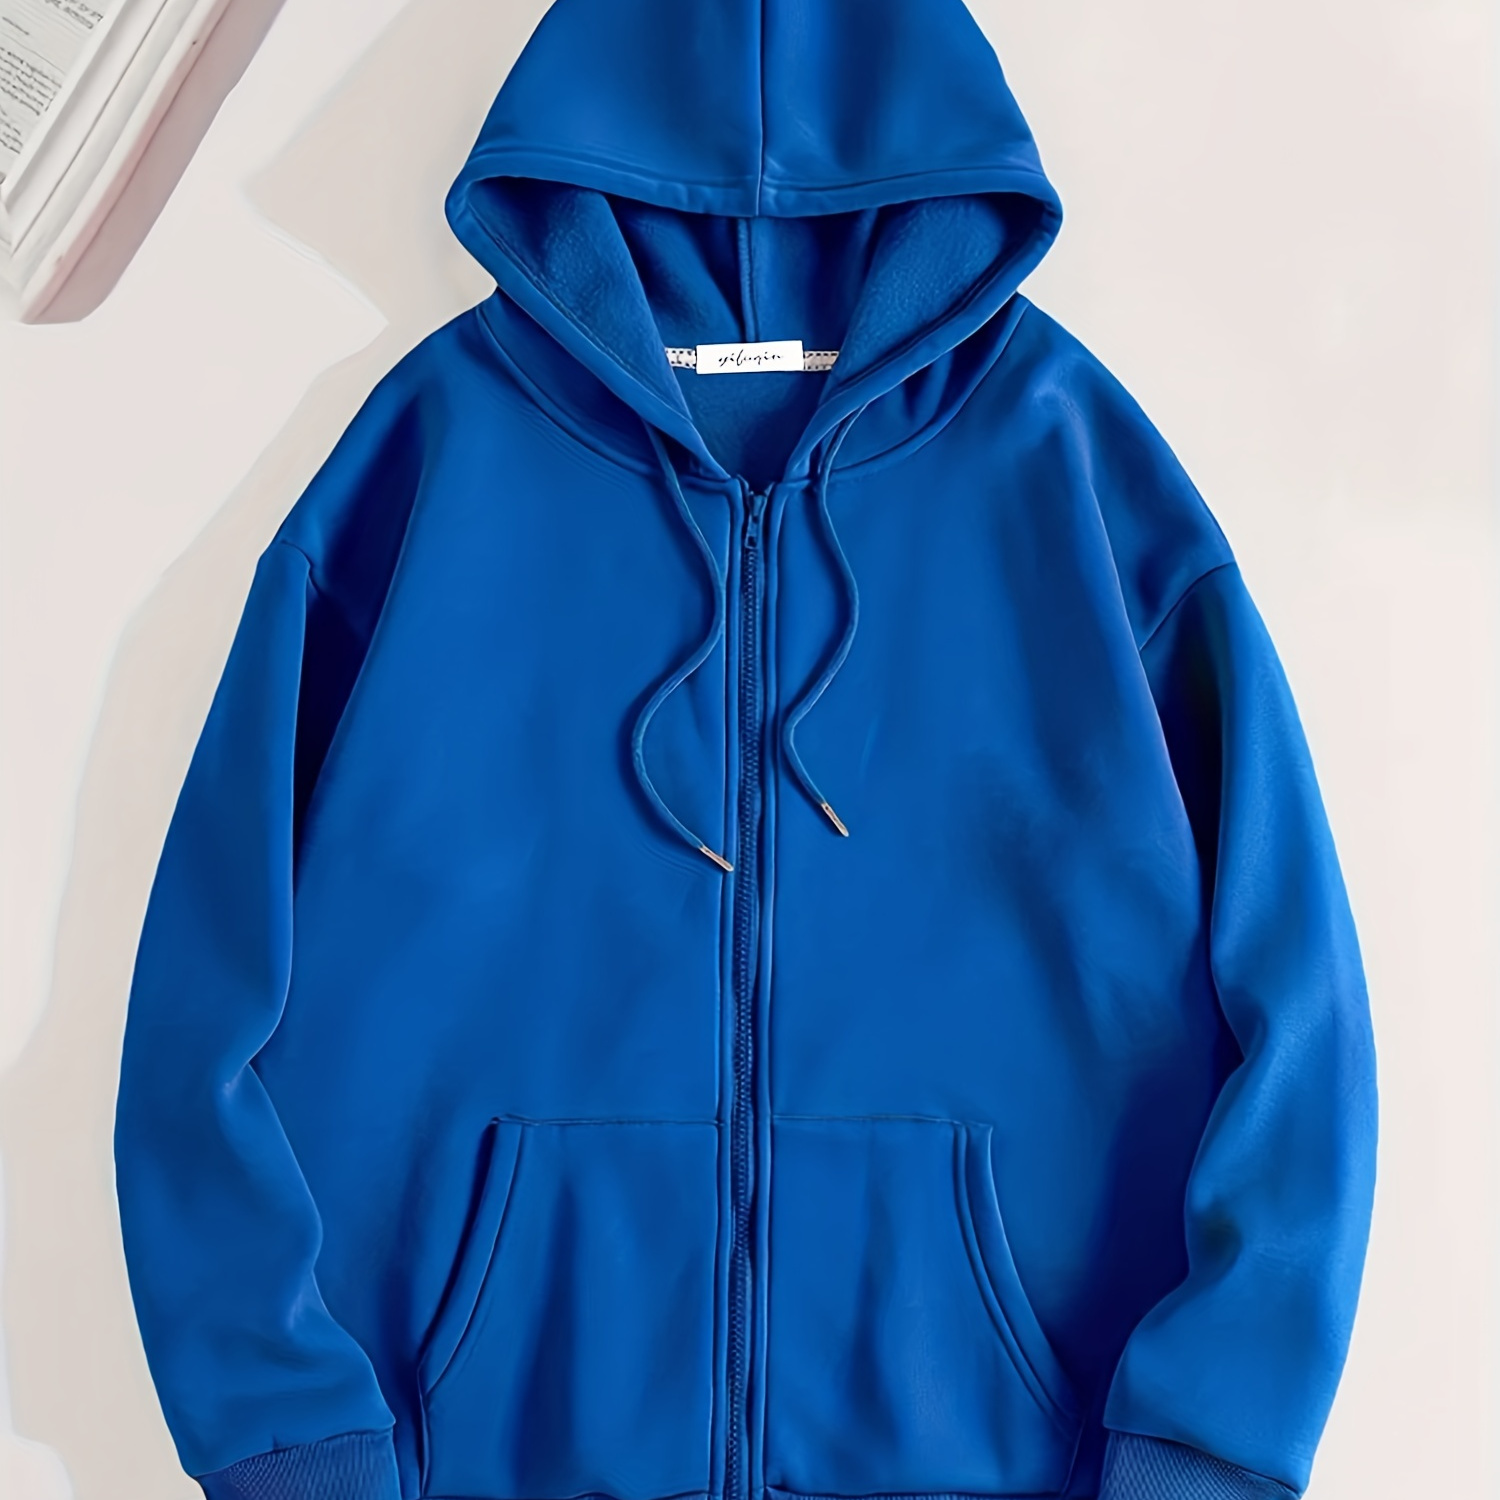 

Zip Up Solid Hoodies, Casual Long Sleeve Kangaroo Pocket Drawstring Sweatshirt, Women's Clothing